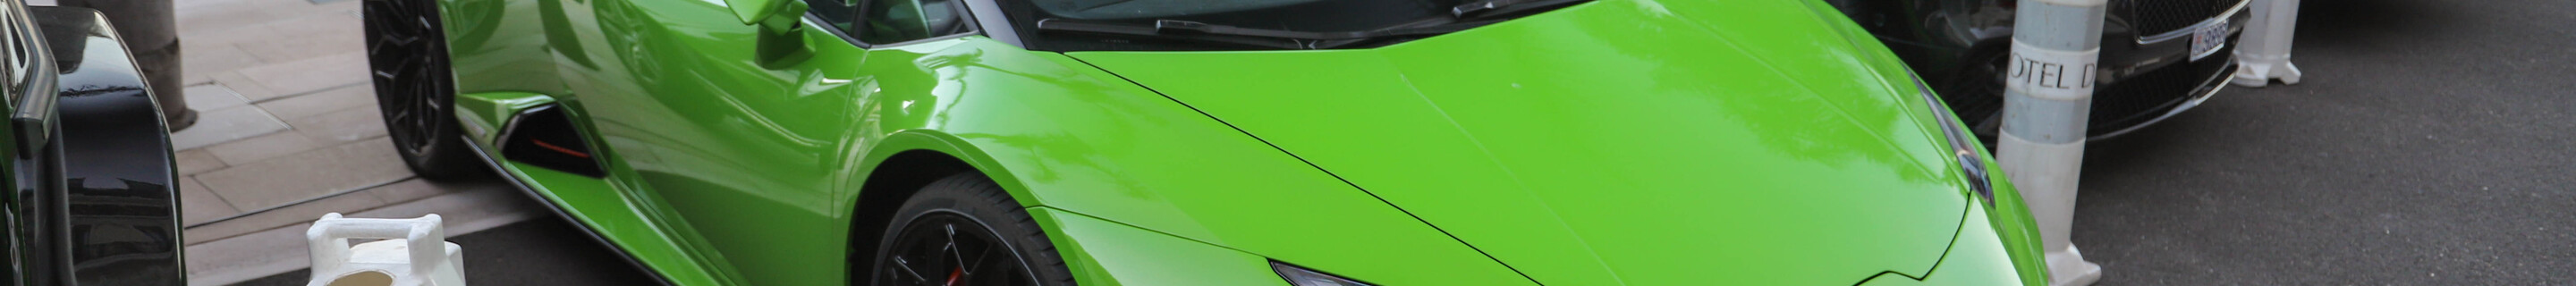 Lamborghini Huracán LP640-4 EVO Spyder